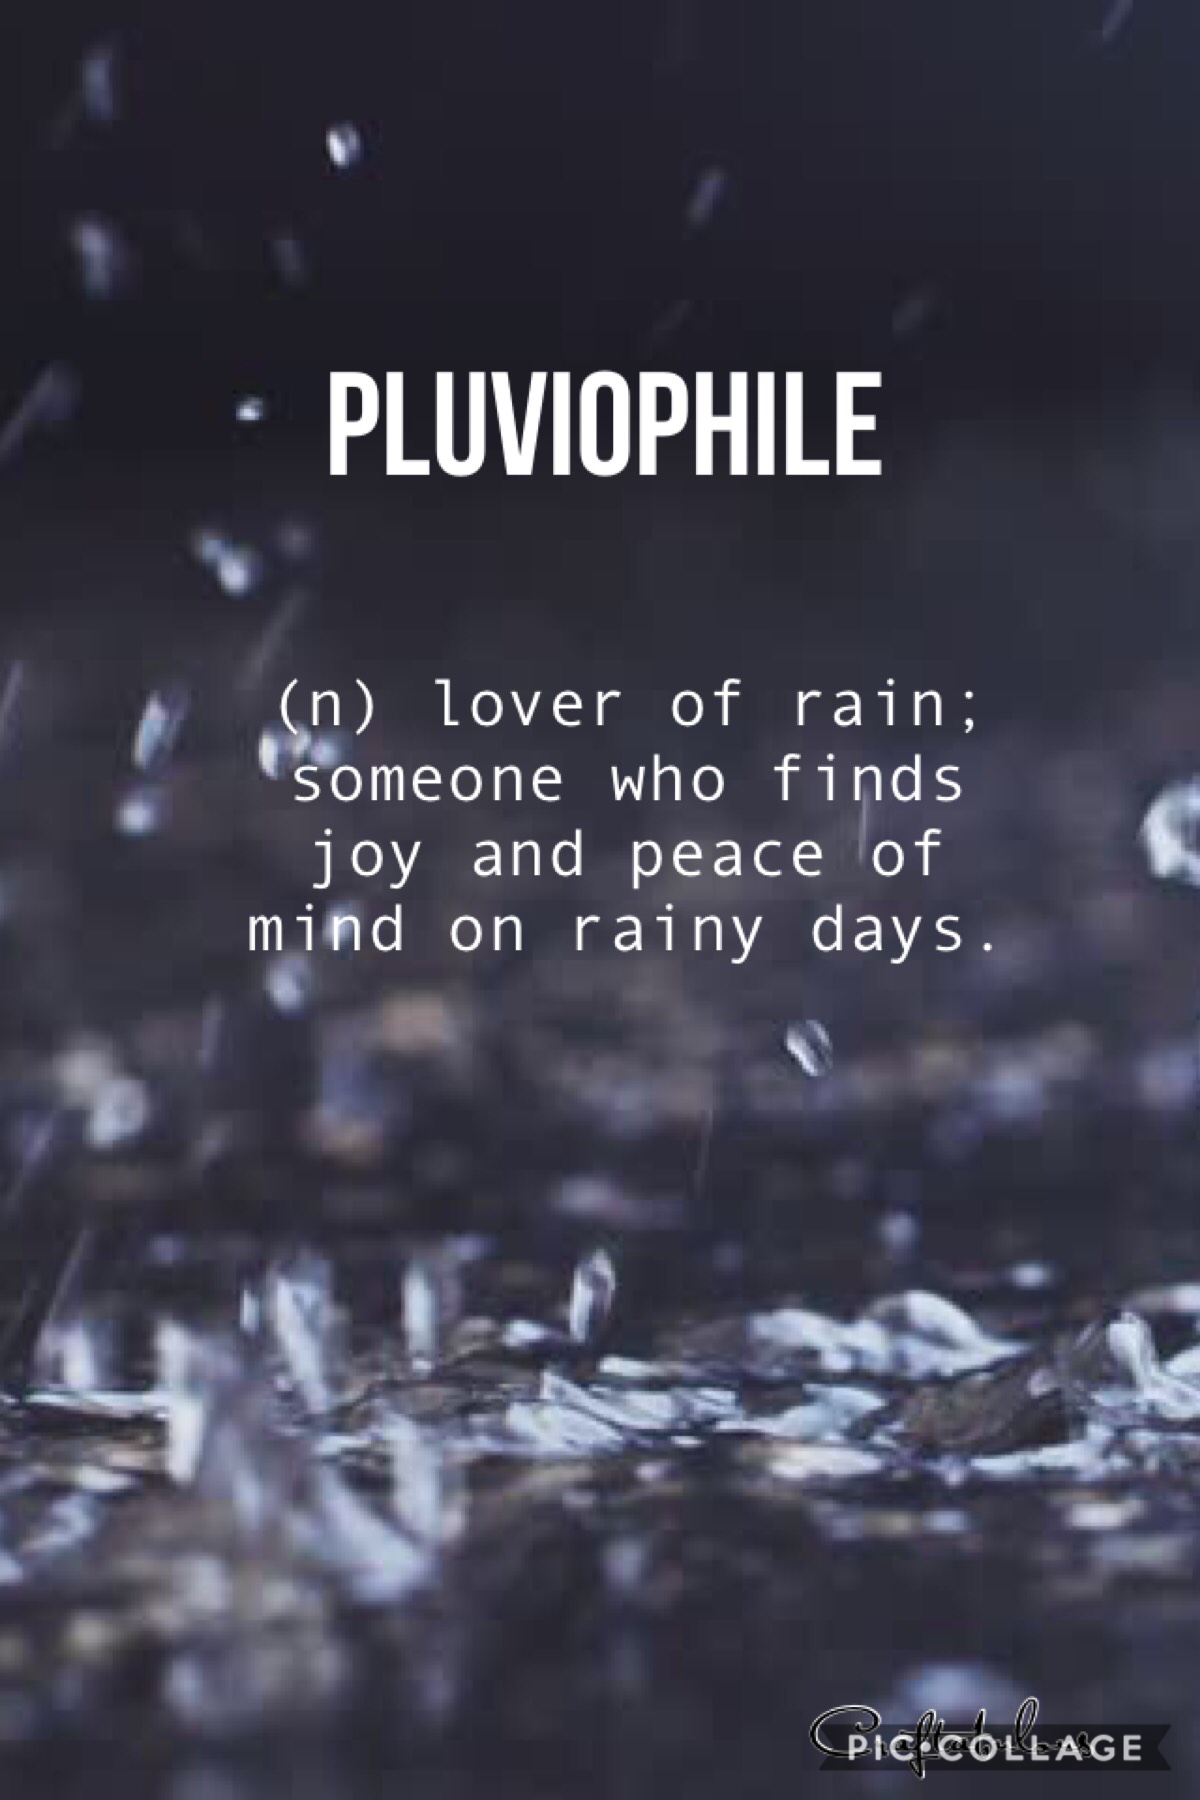 Are you a pluviophile???